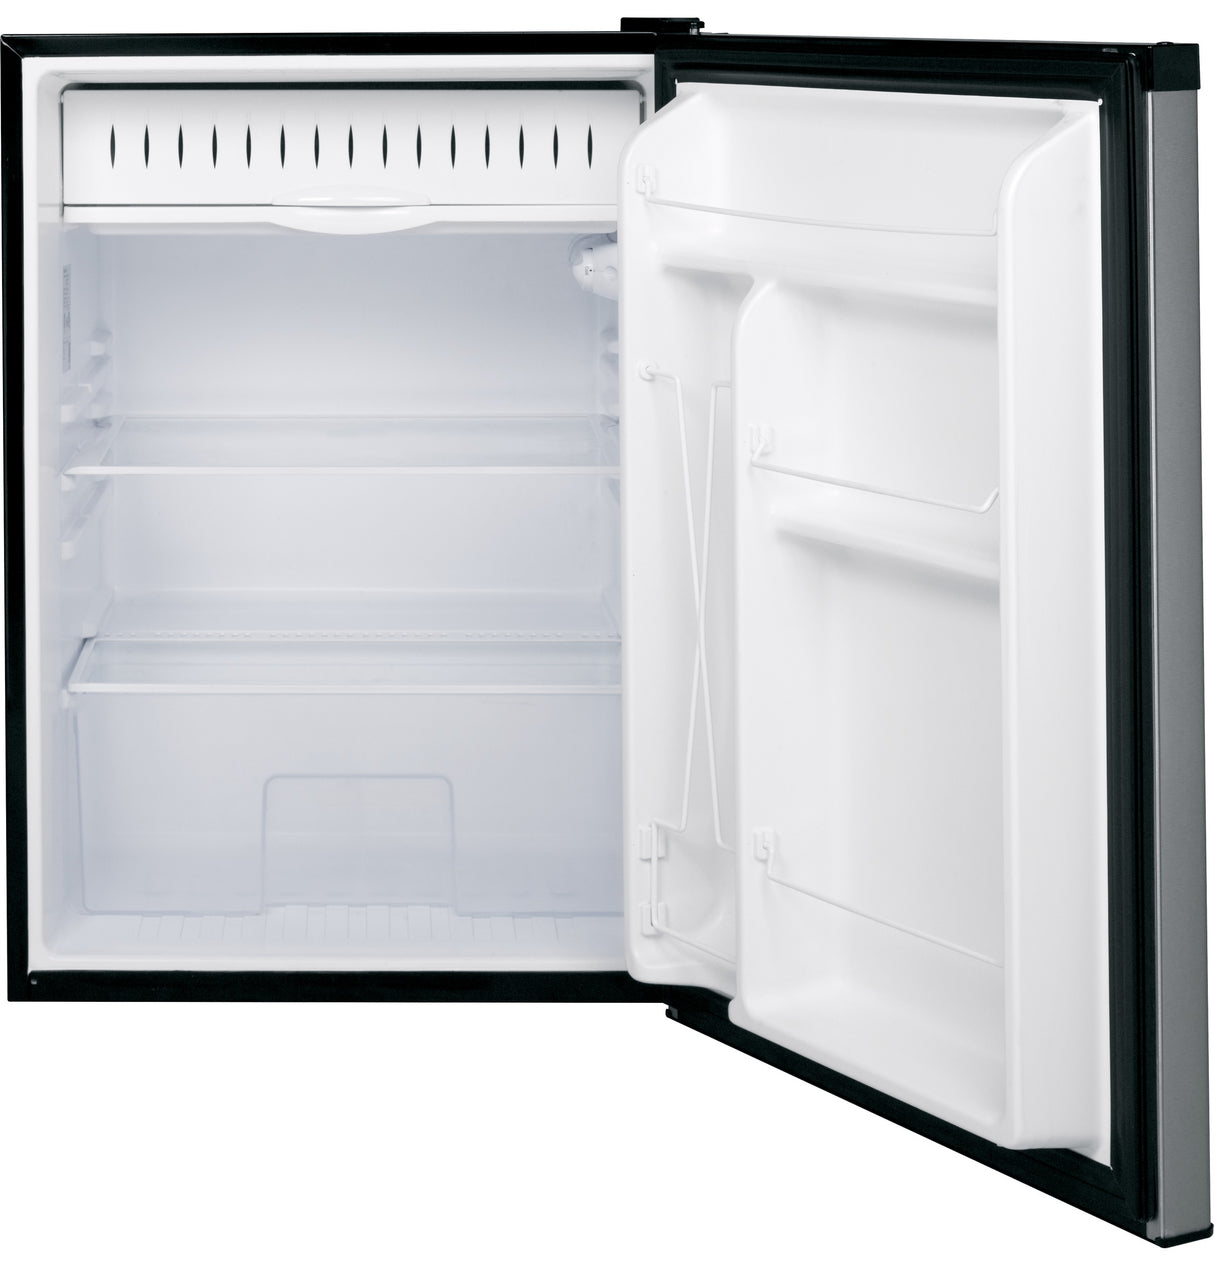 GE(R) ENERGY STAR(R) Compact Refrigerator - (GCE06GSHSB)